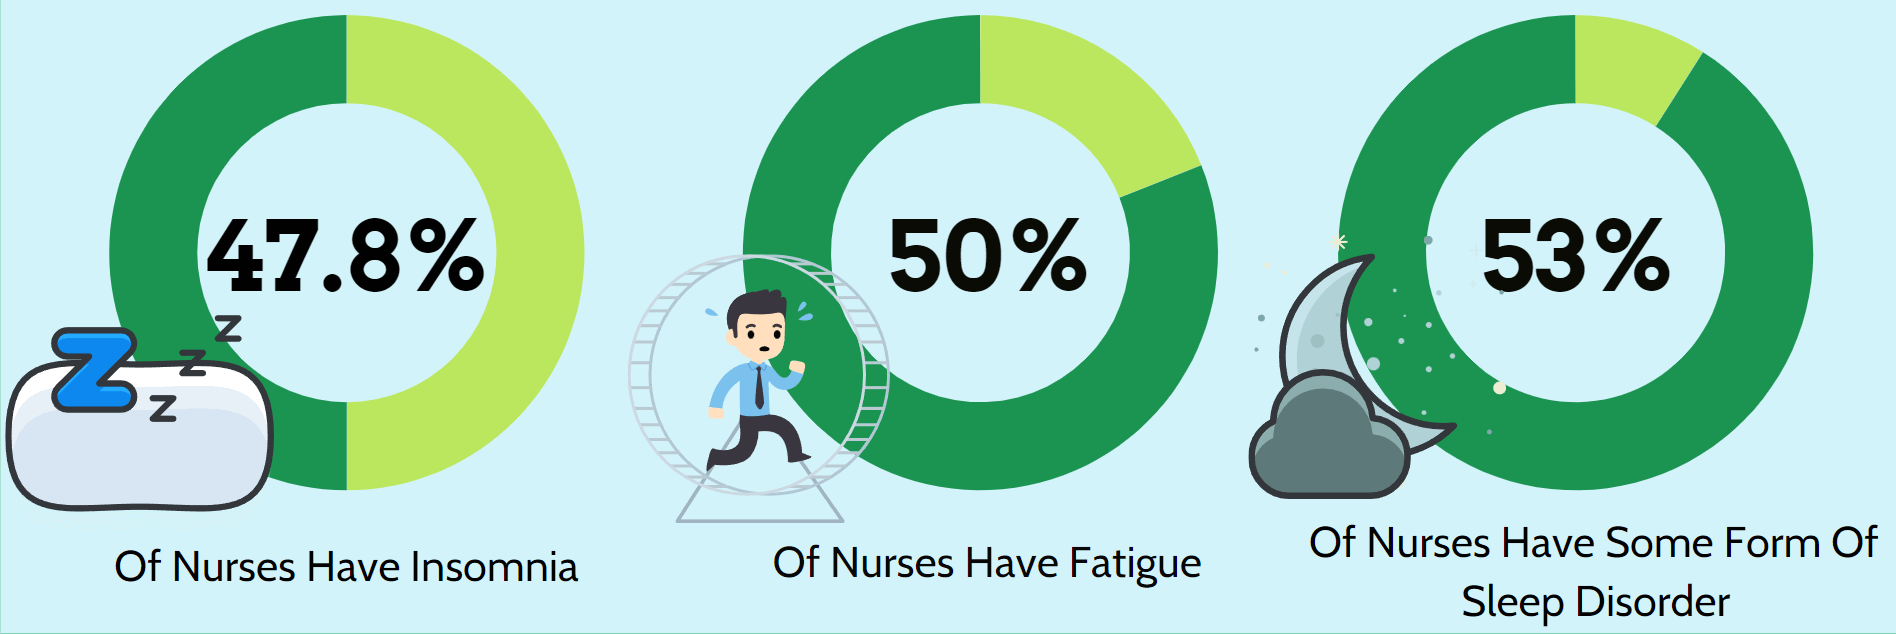 Overworked nurses mistakes and health